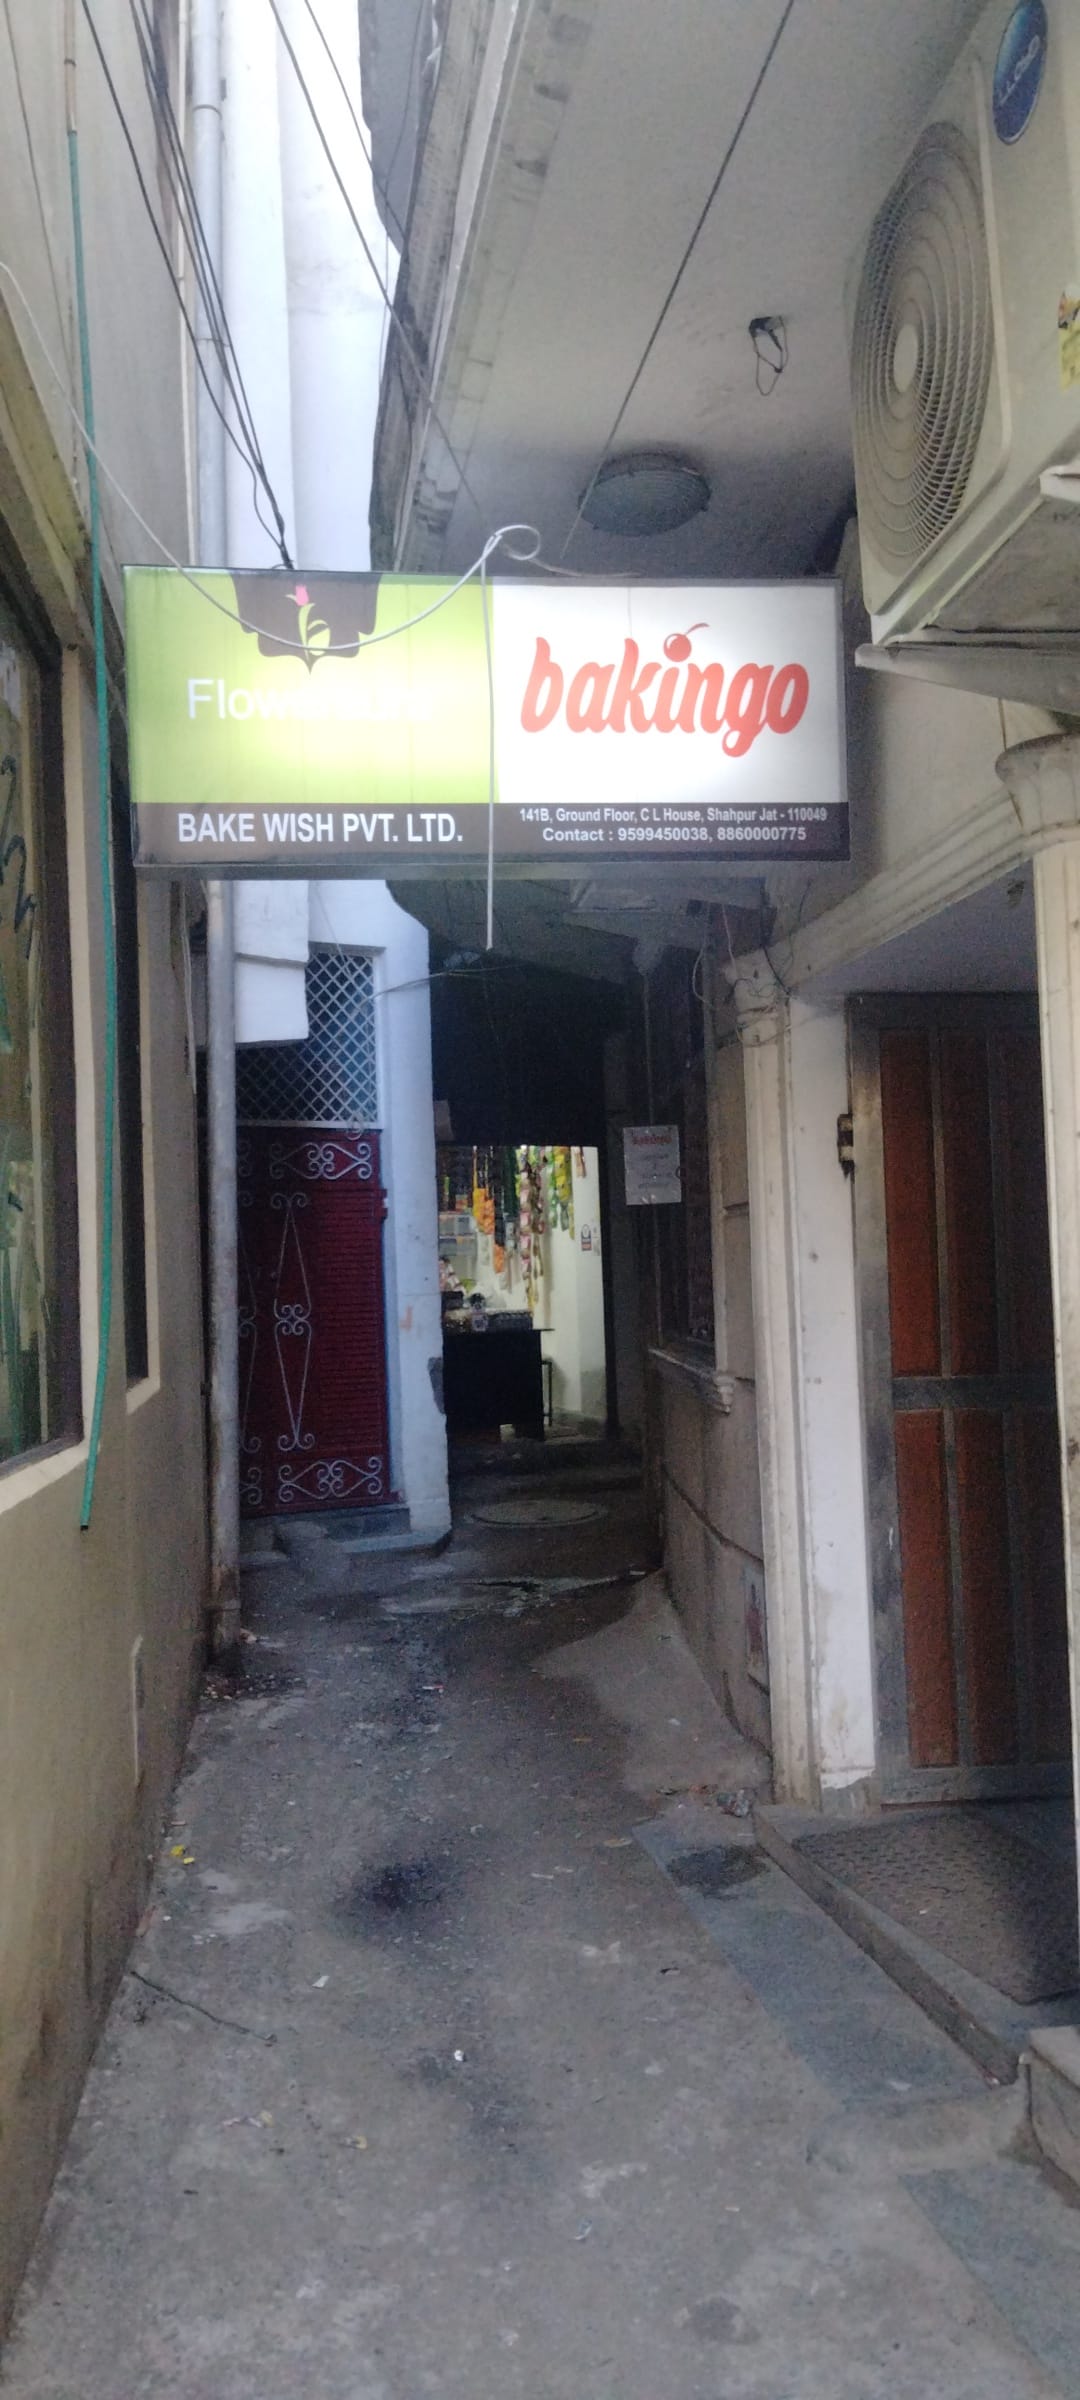 Bakingo in Gurgaon Sector 47,Delhi - Best Bakery Food Home Delivery in  Delhi - Justdial